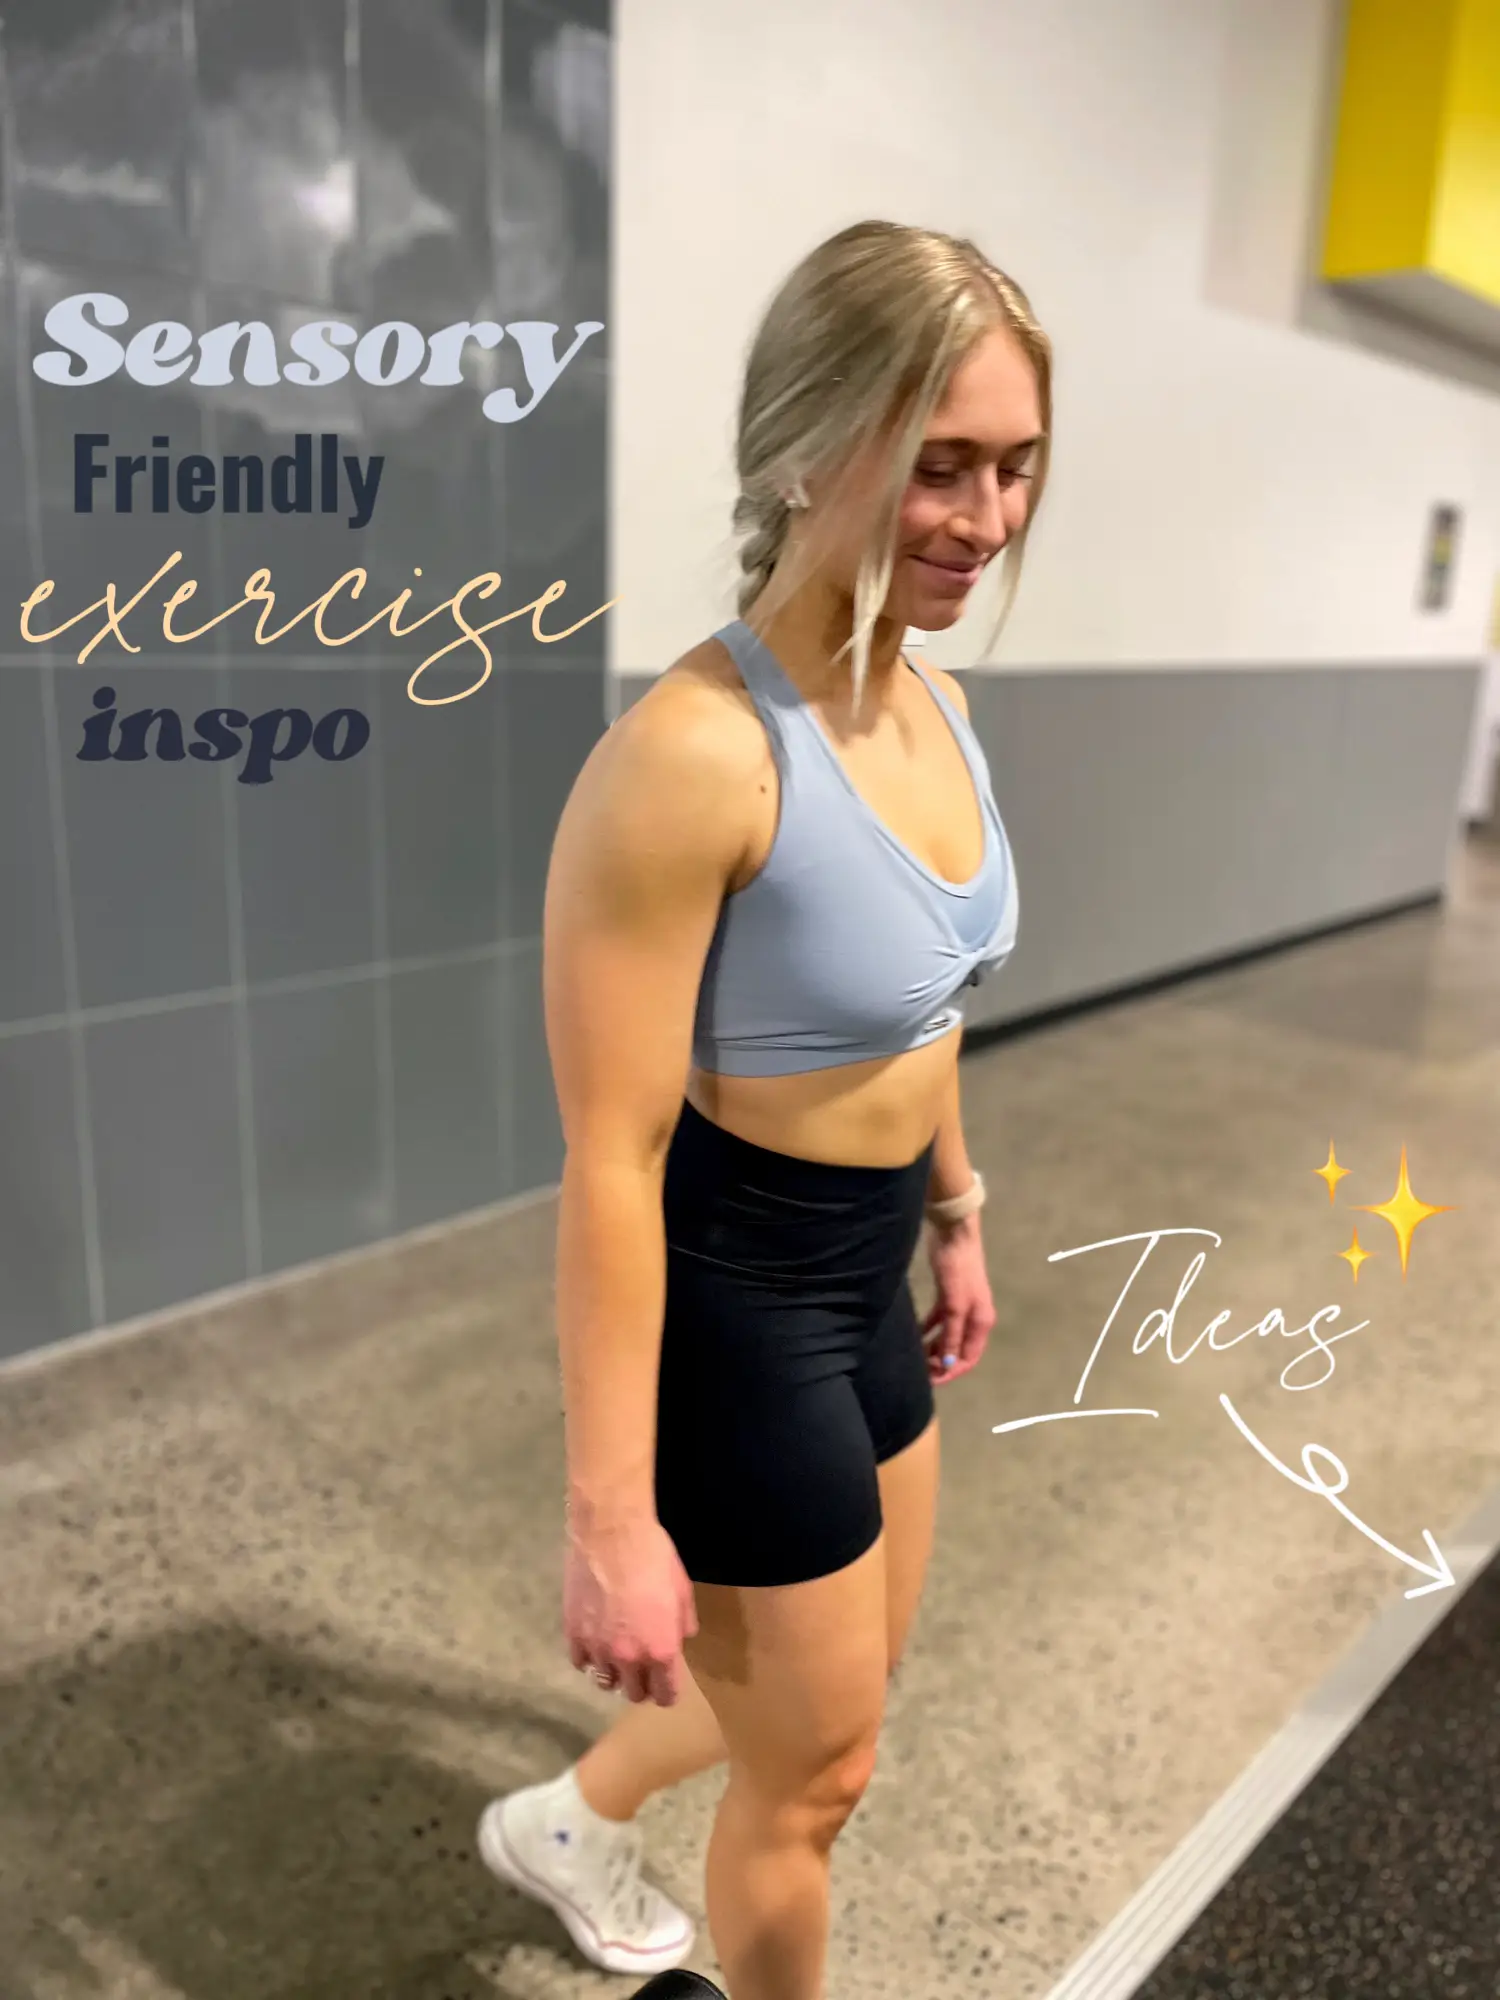 Sensory-Friendly Exercise Ideas 🧘🏼‍♀️🩰🏋🏼‍♀️